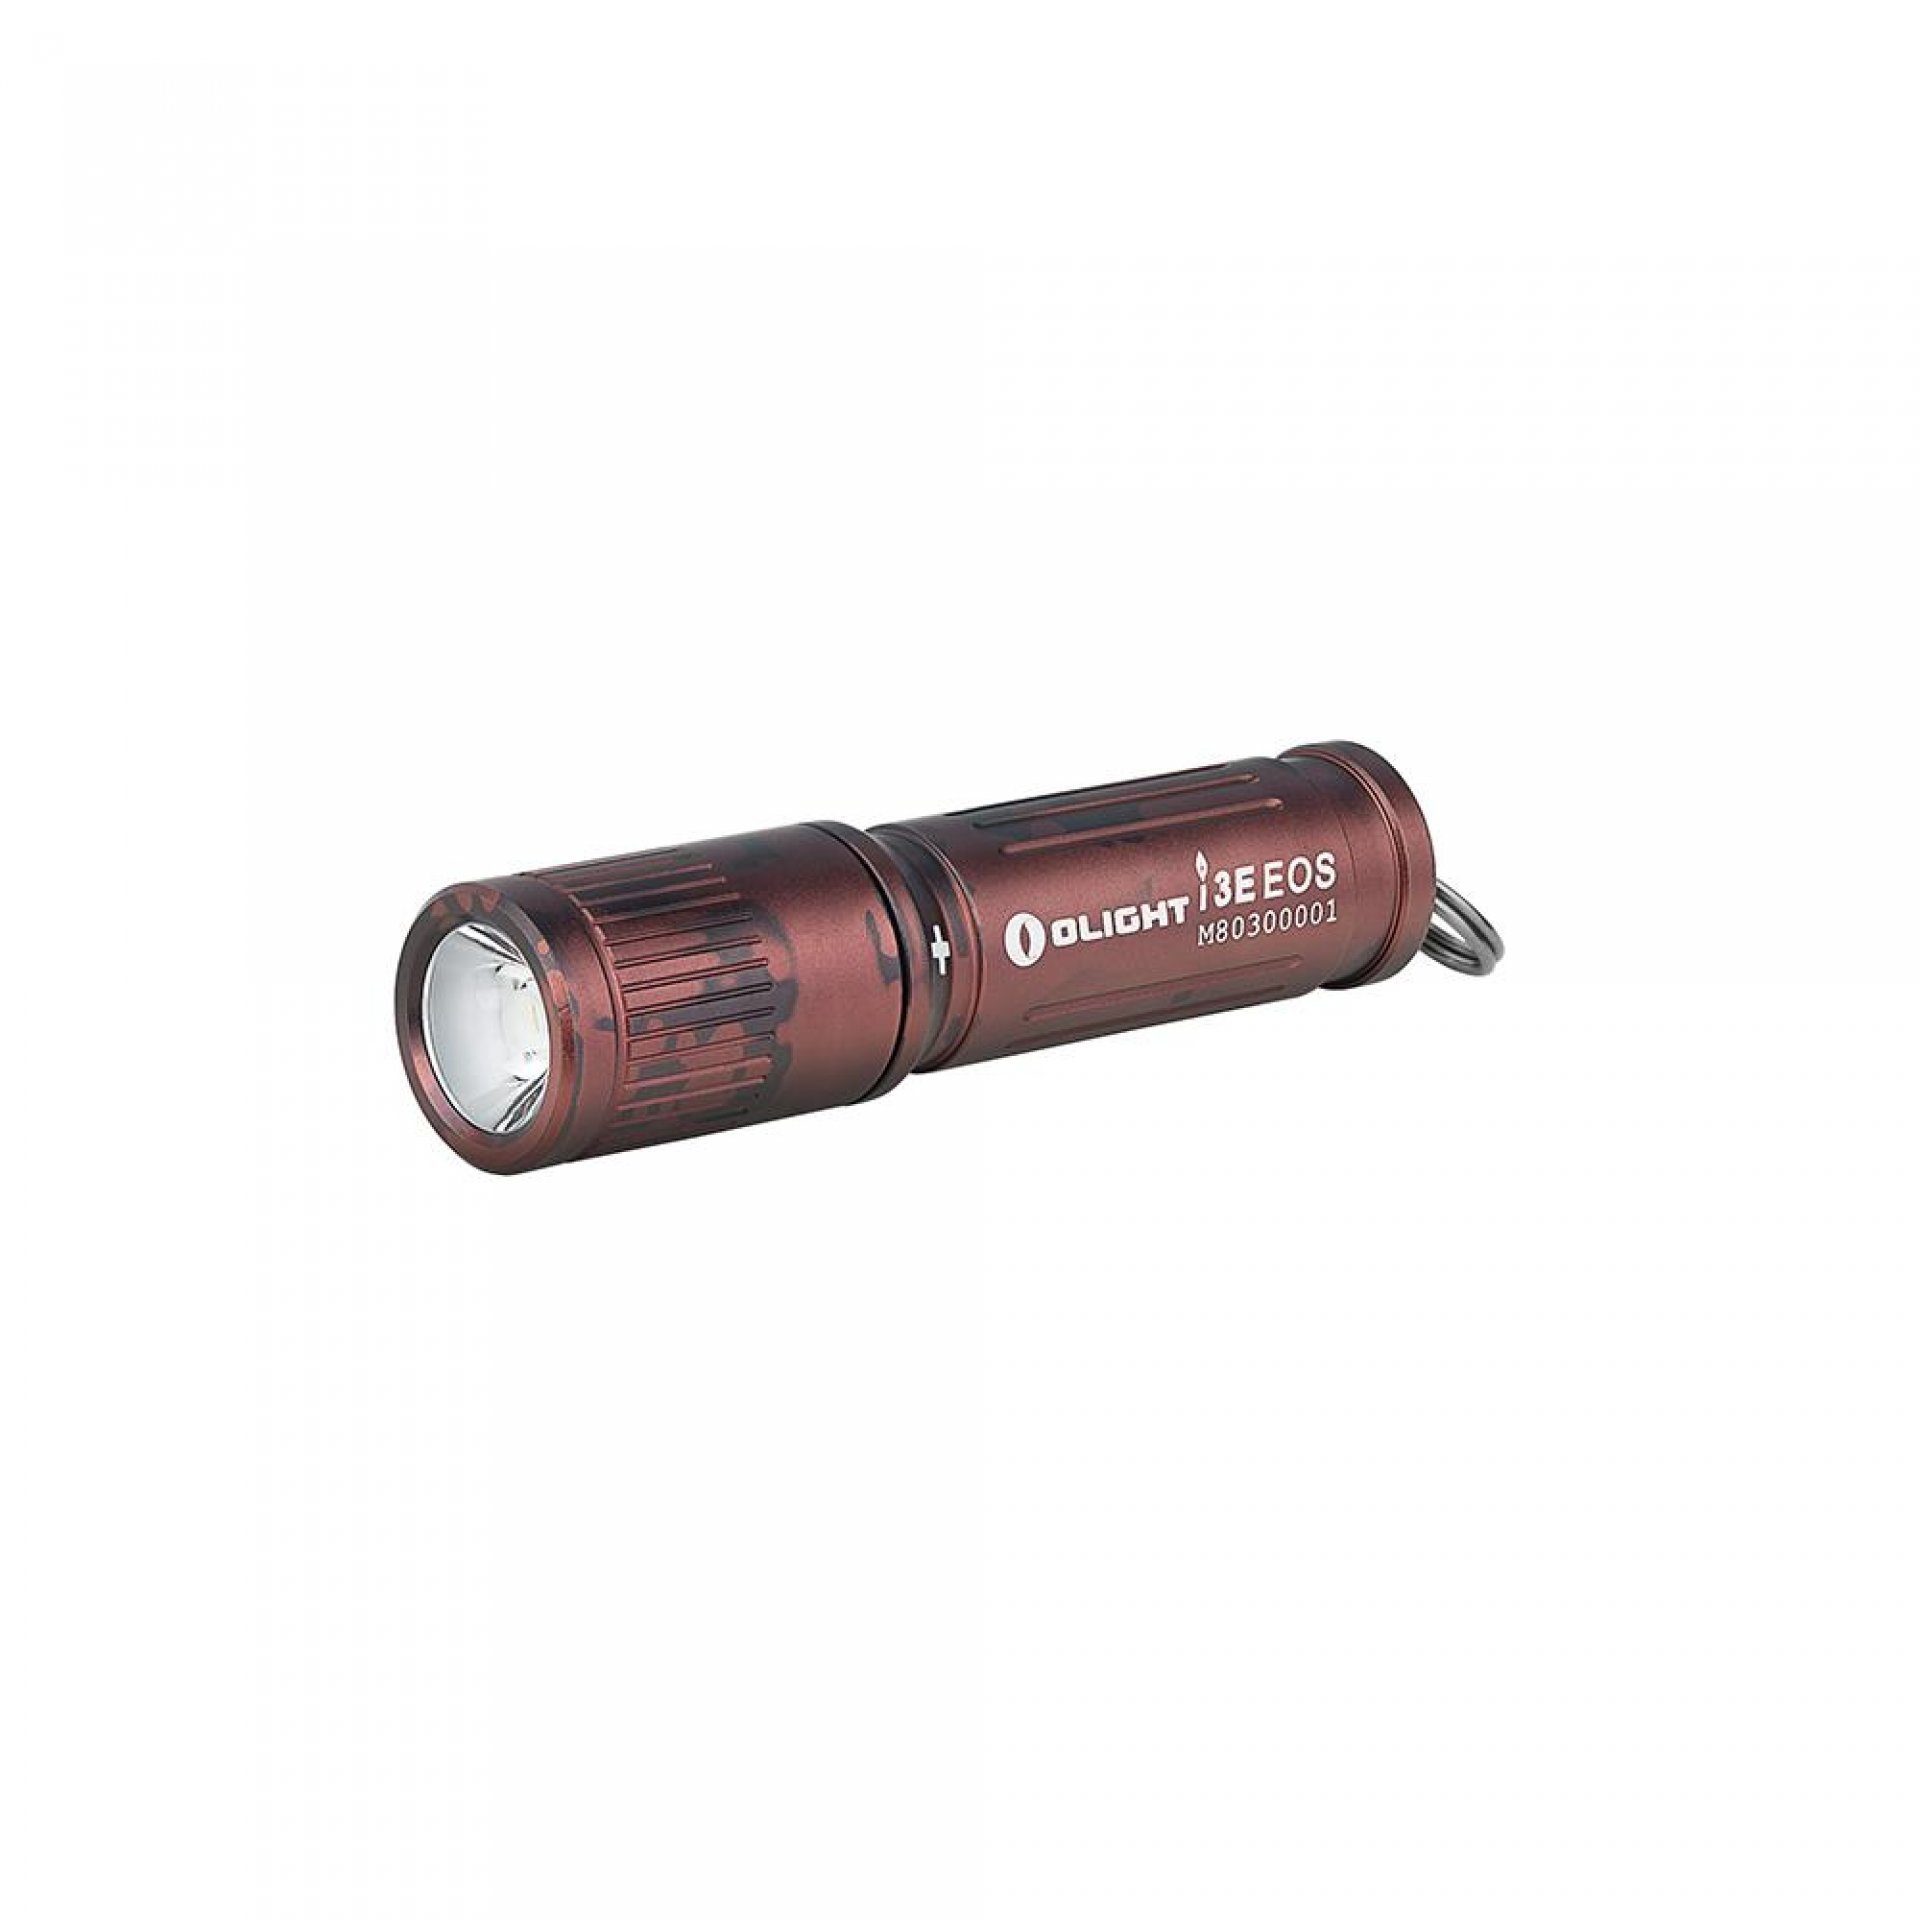 OLIGHT Taschenlampe OLIGHT I3E EOS Mini LED Taschenlampe Schlüsselanhänger 90 Lumen Antike Bronze